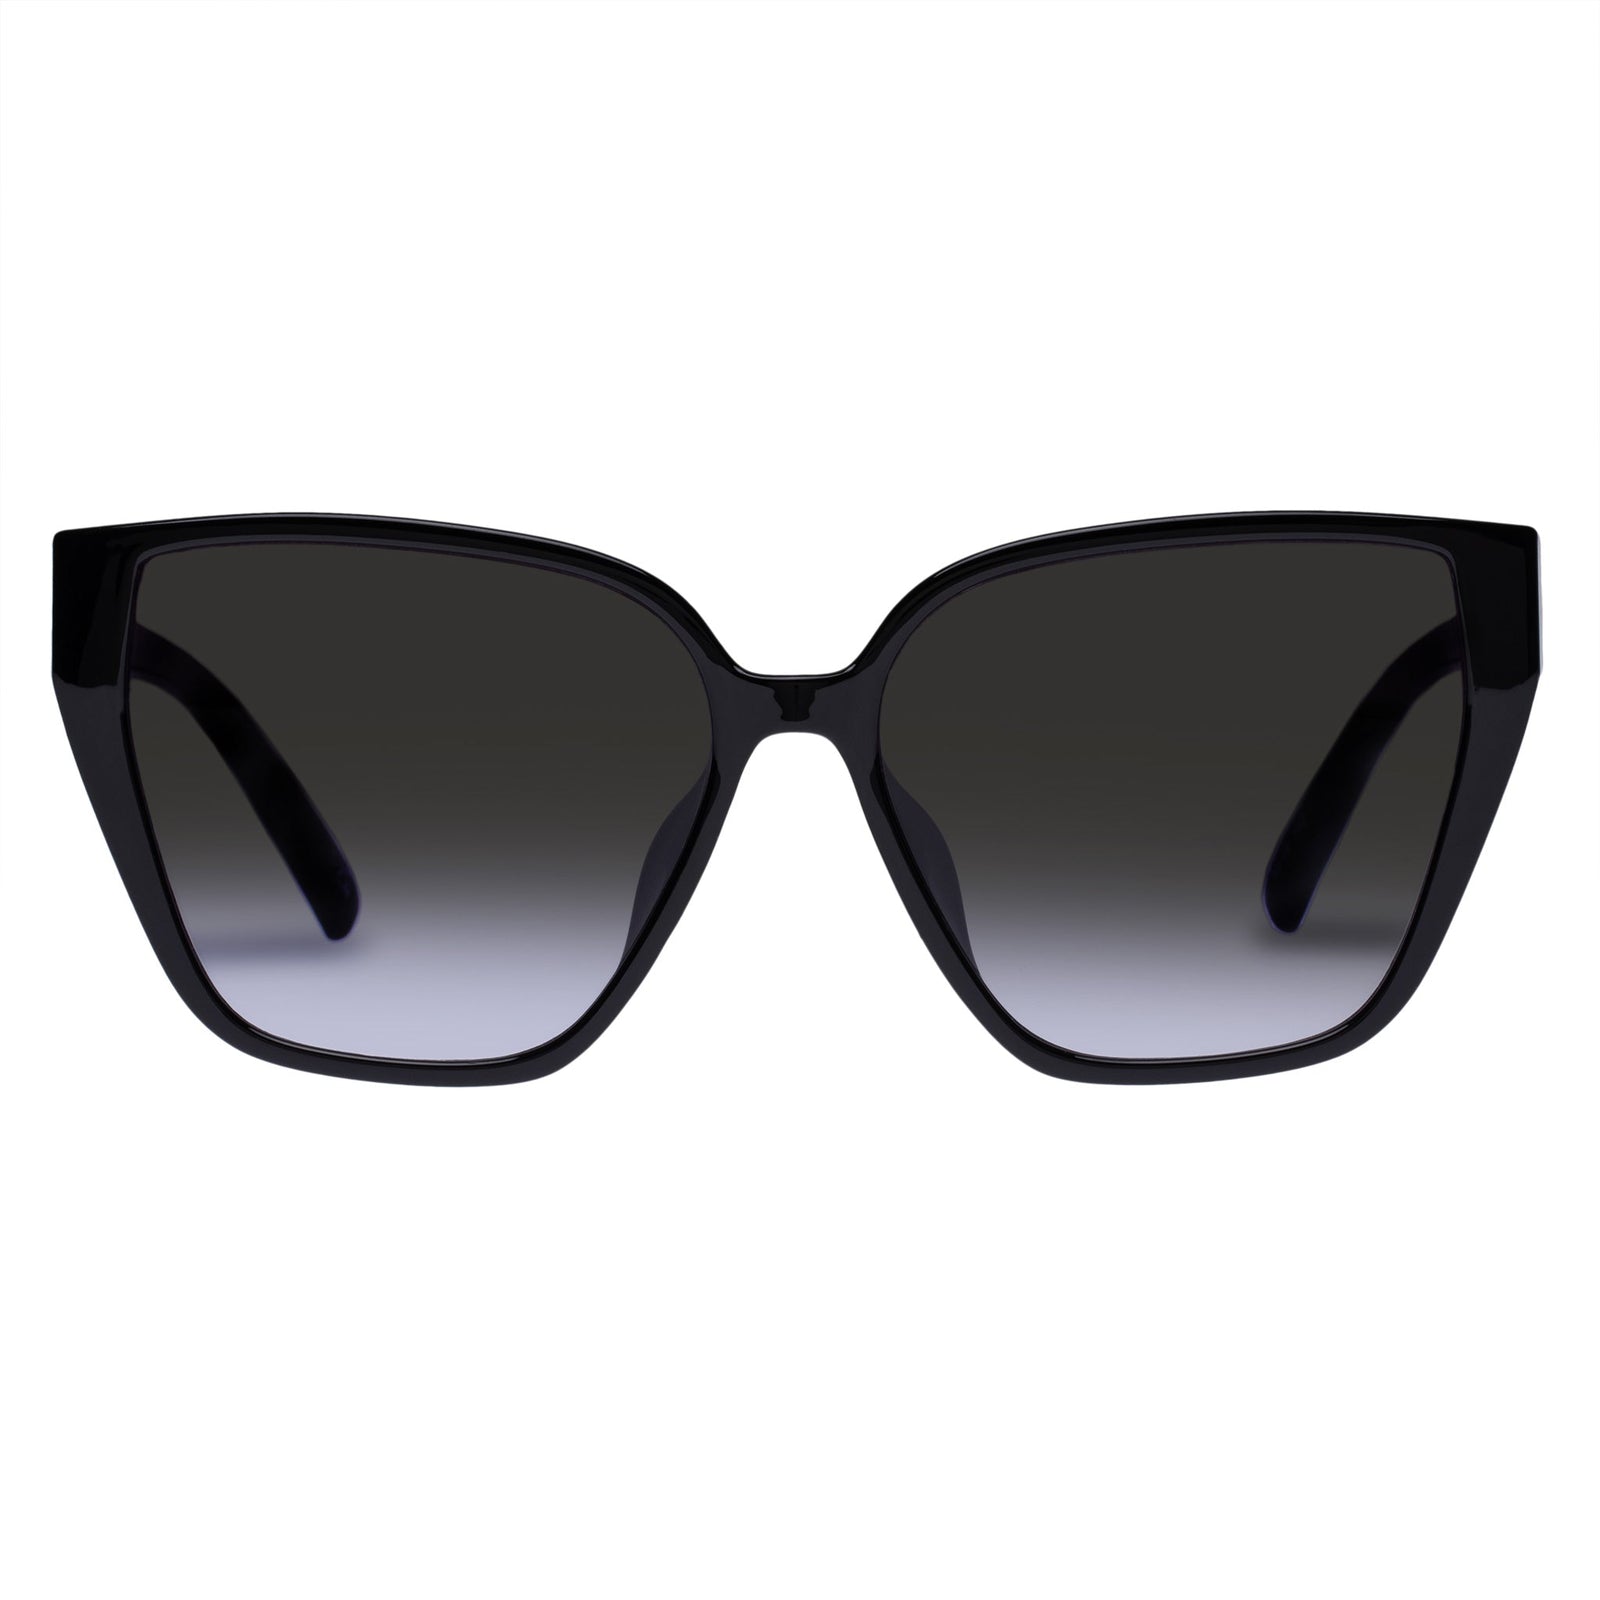 Pre-Bio-Tic Alt Fit Barley Uni-Sex Rectangle Sunglasses